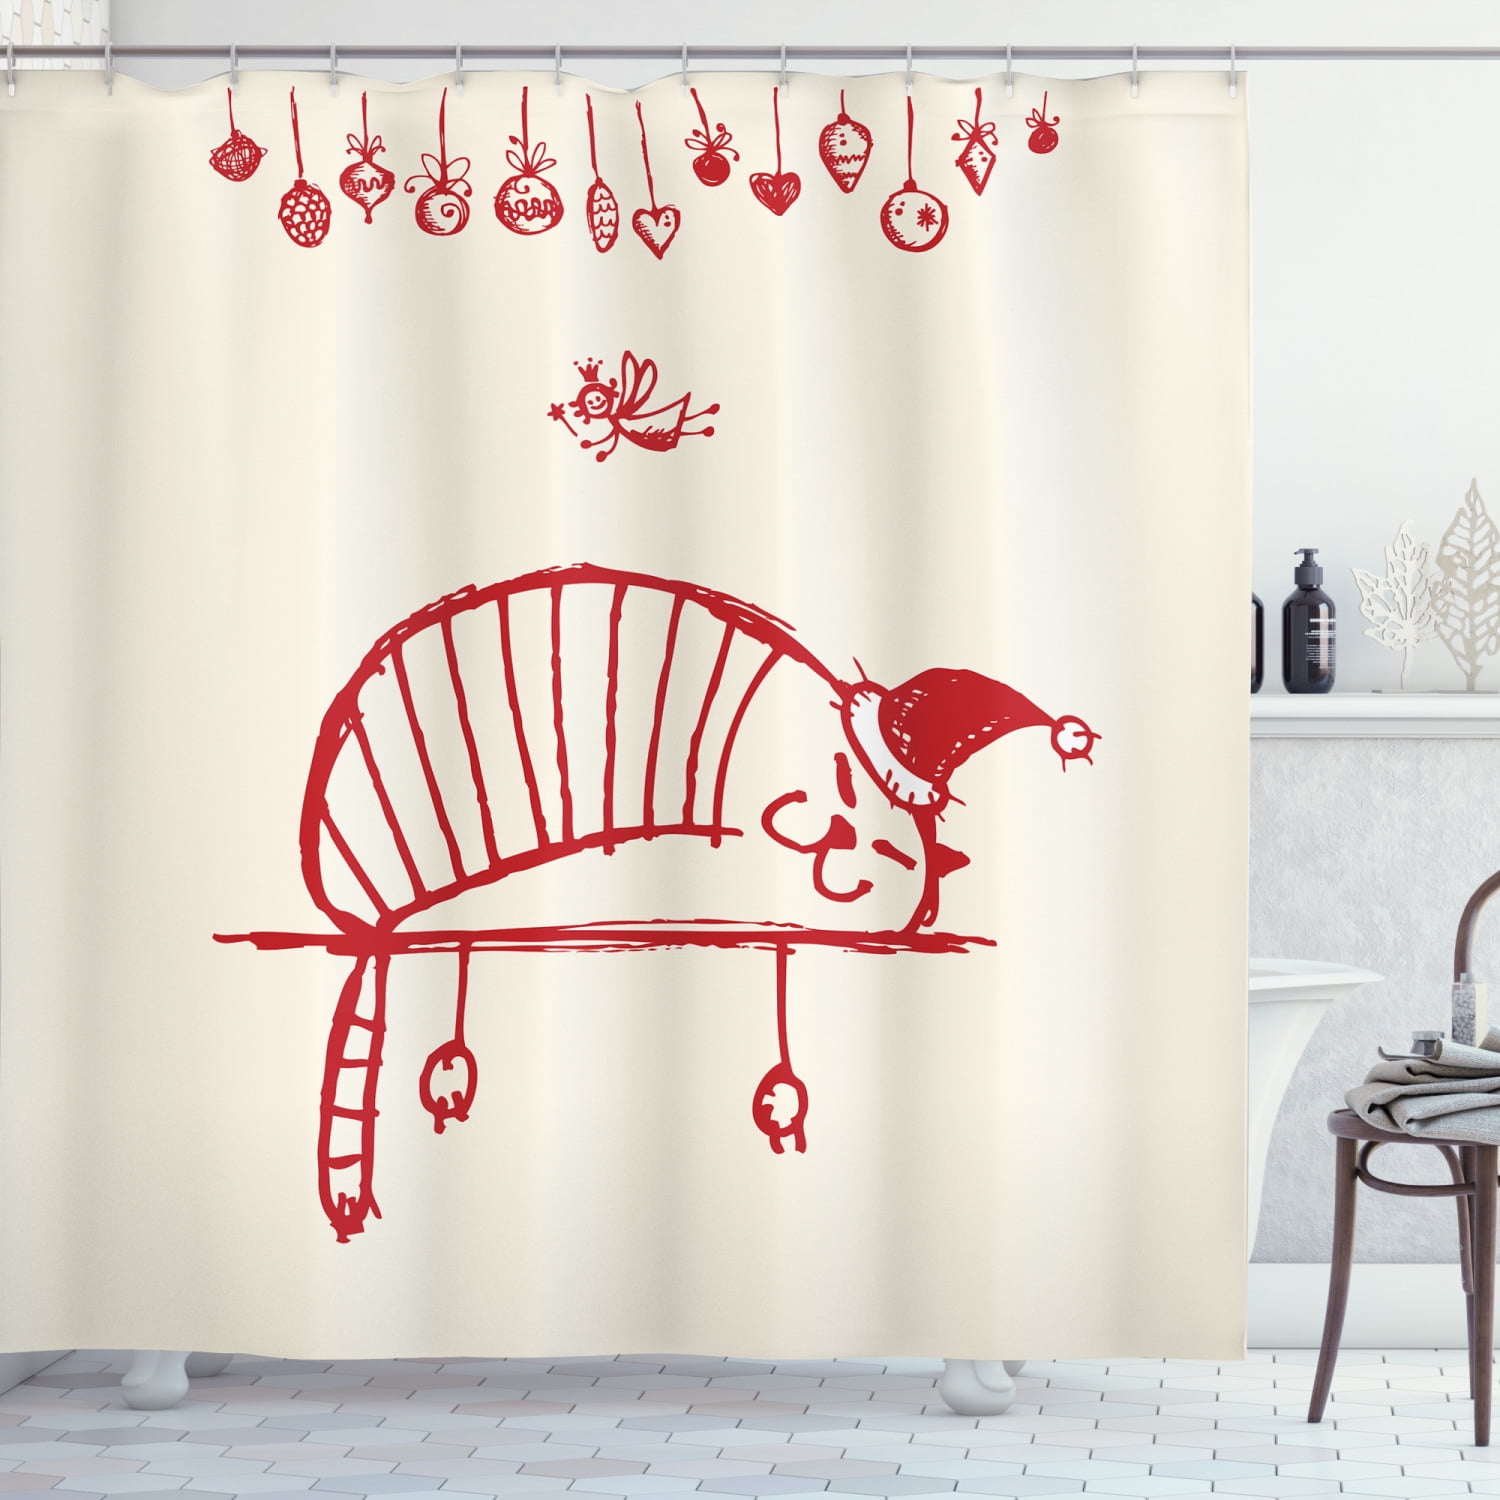 Cute alpaca on farm ABathroom Fabric Shower Curtain With Hooks 180x180cm-71in 